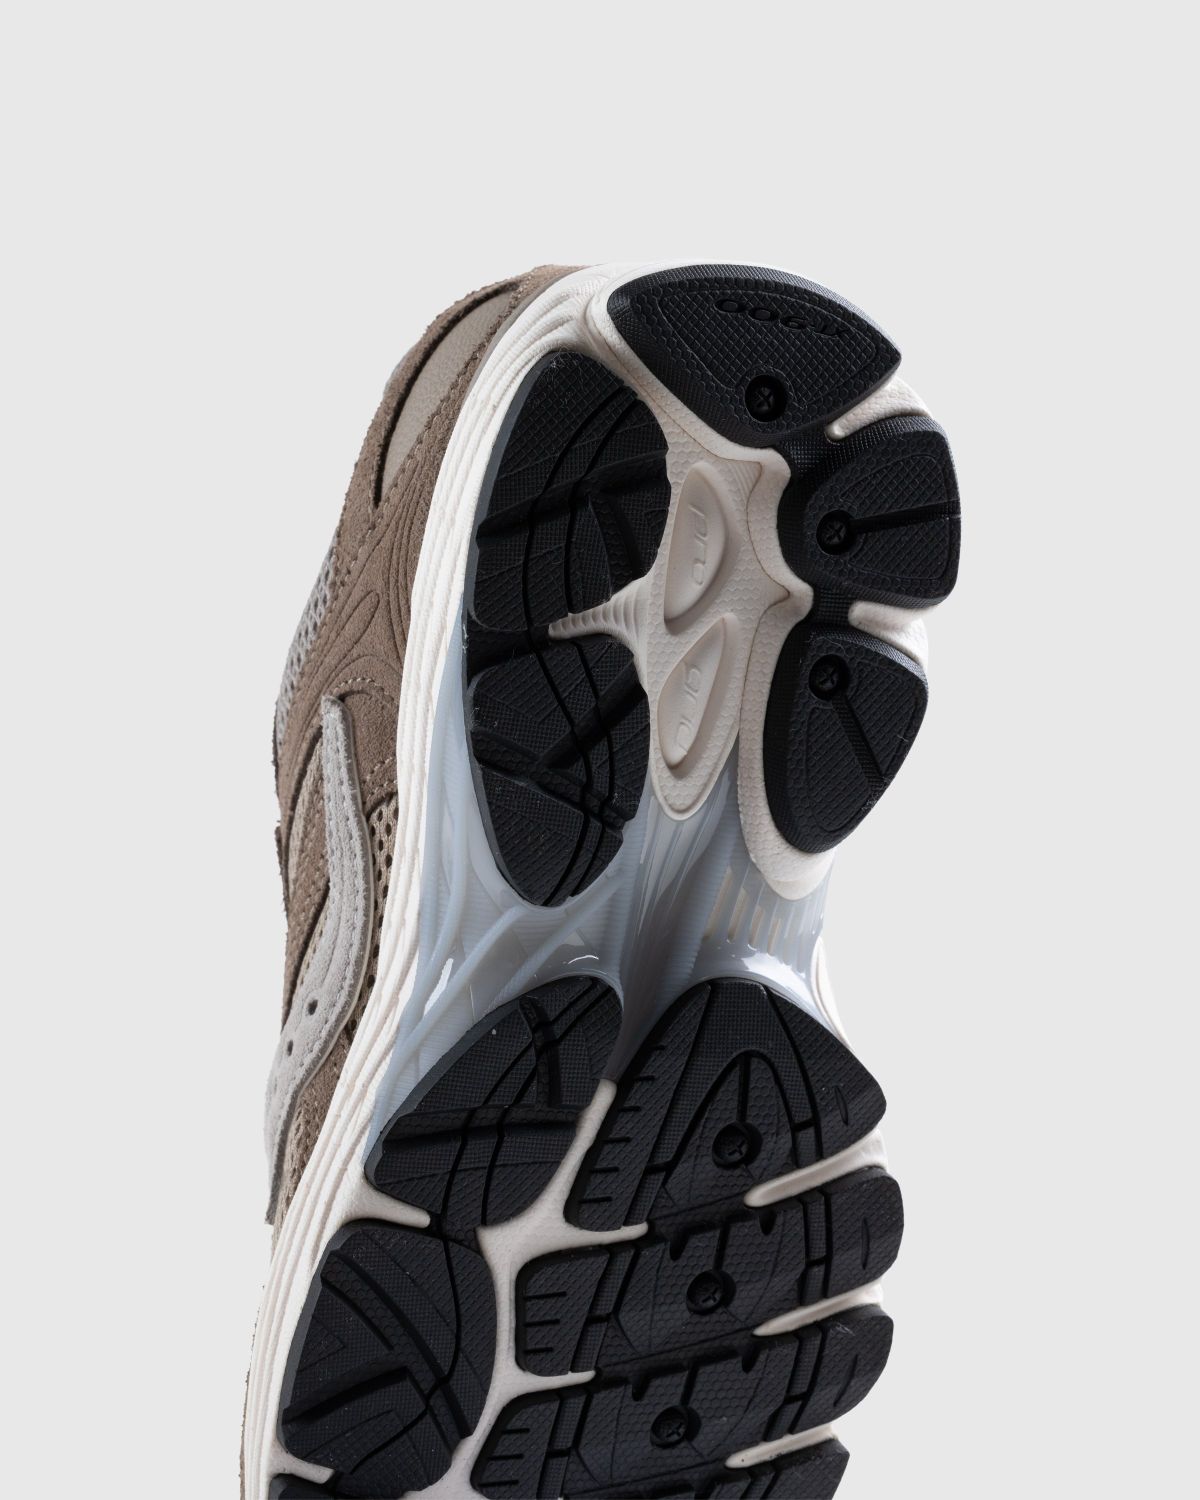 Saucony – ProGrid Omni 9 Premium Greige - Low Top Sneakers - Grey - Image 6